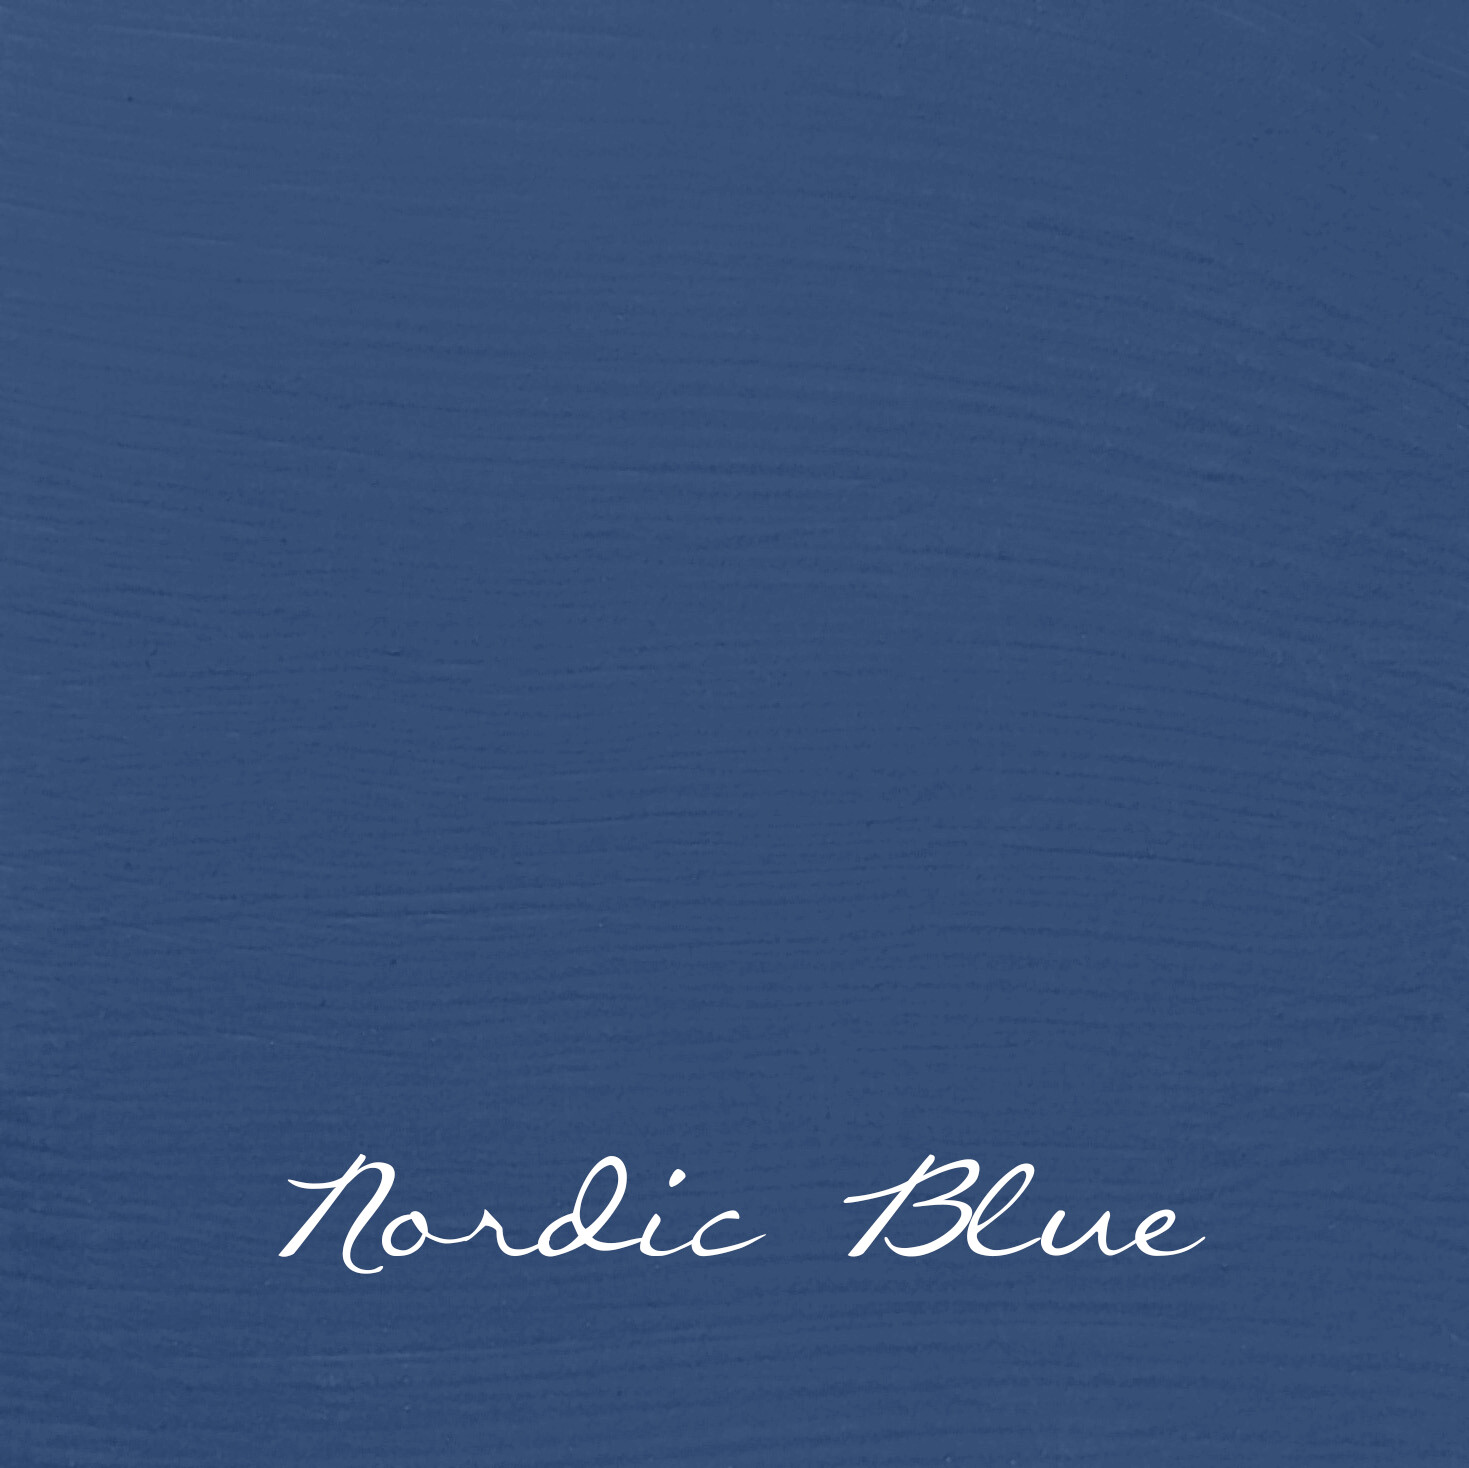 NORDIC BLUE